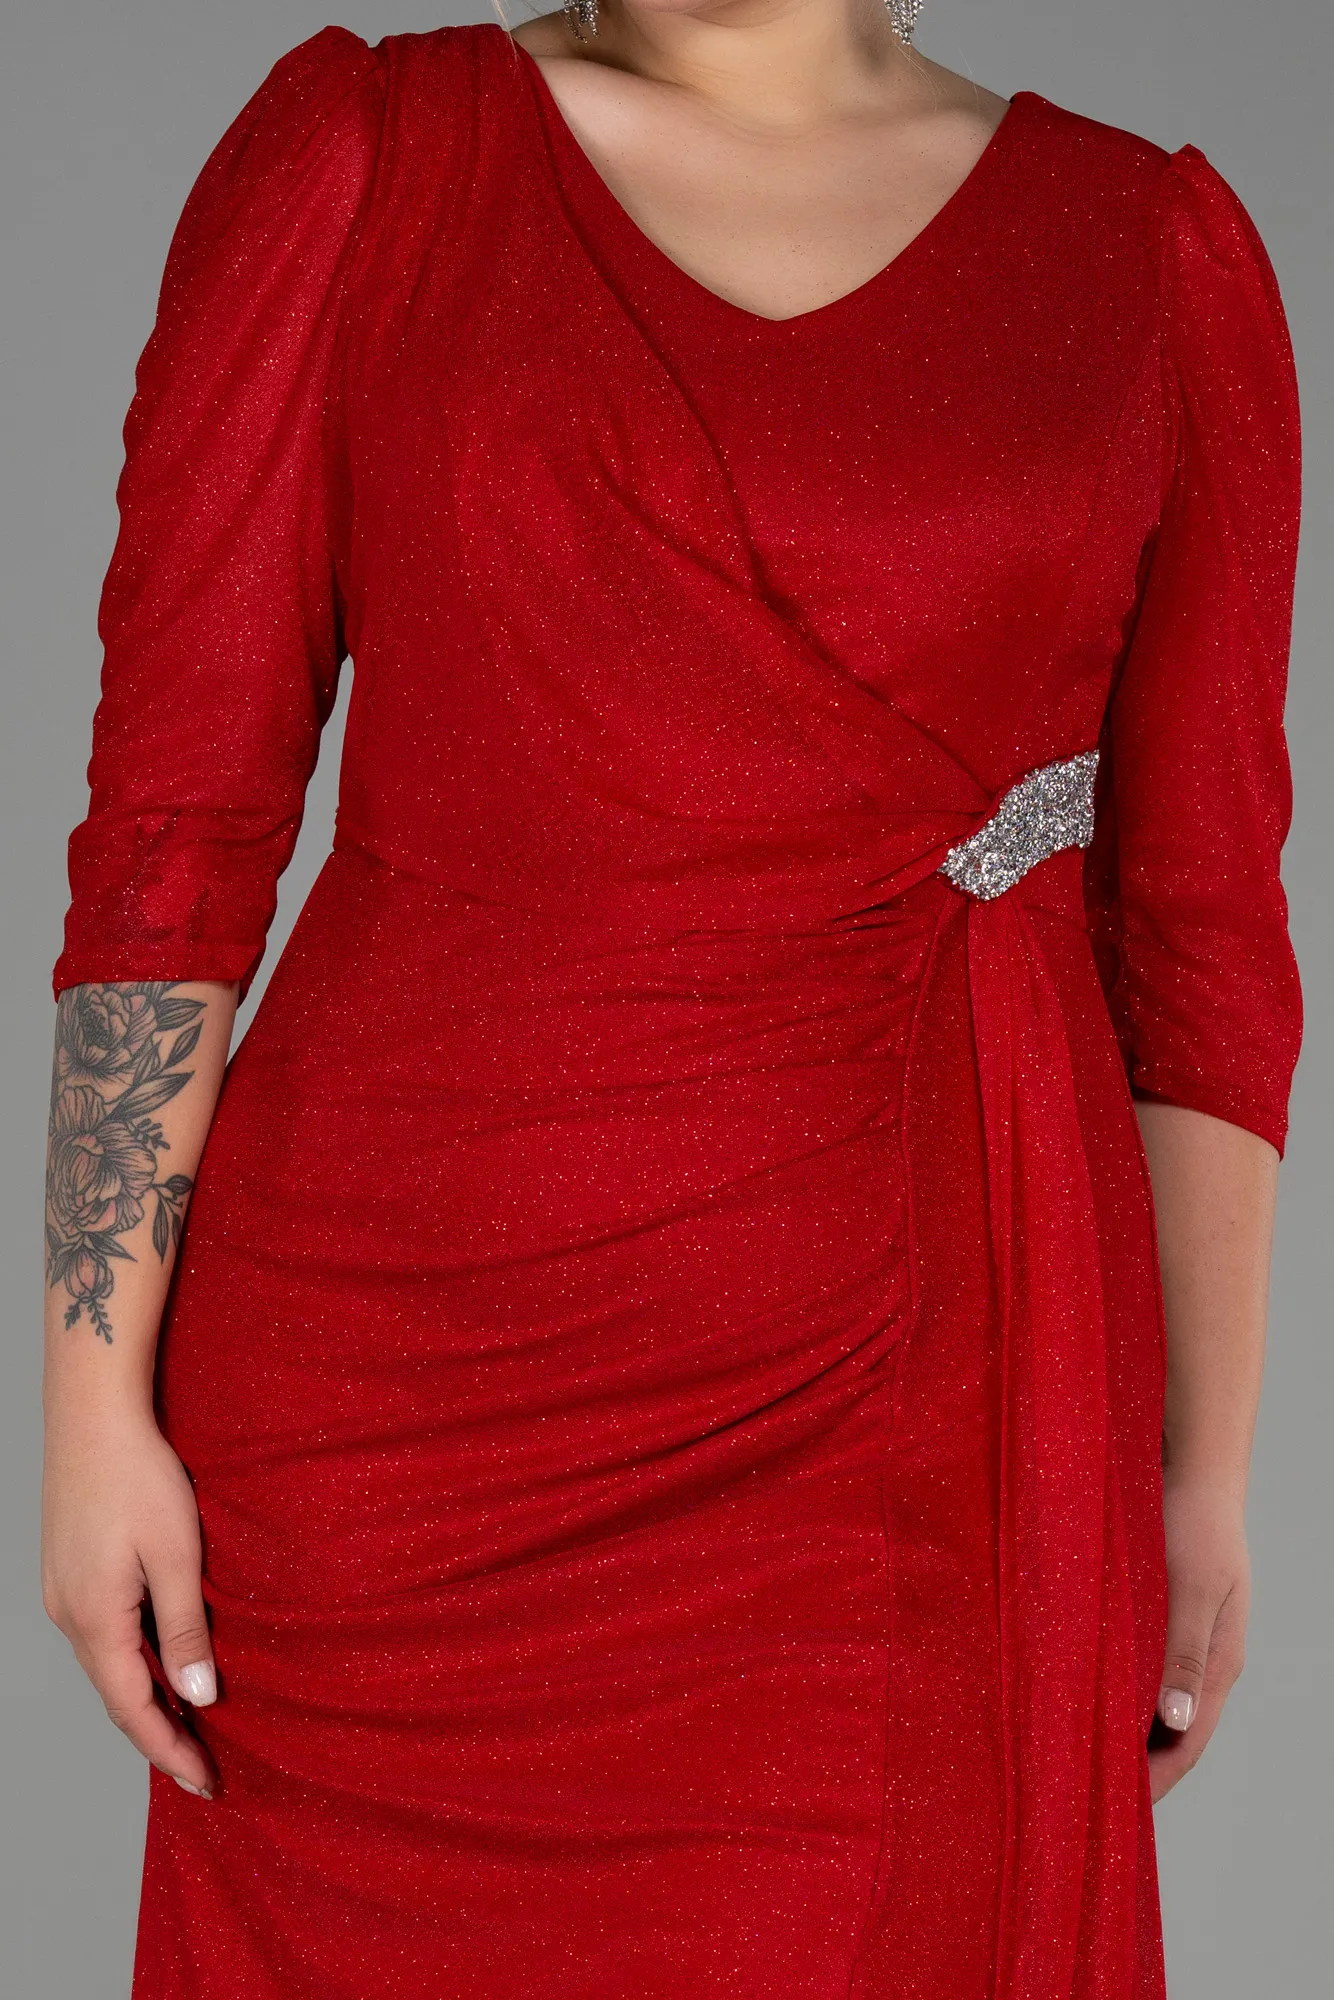 Red-Long Plus Size Evening Dress ABU3279